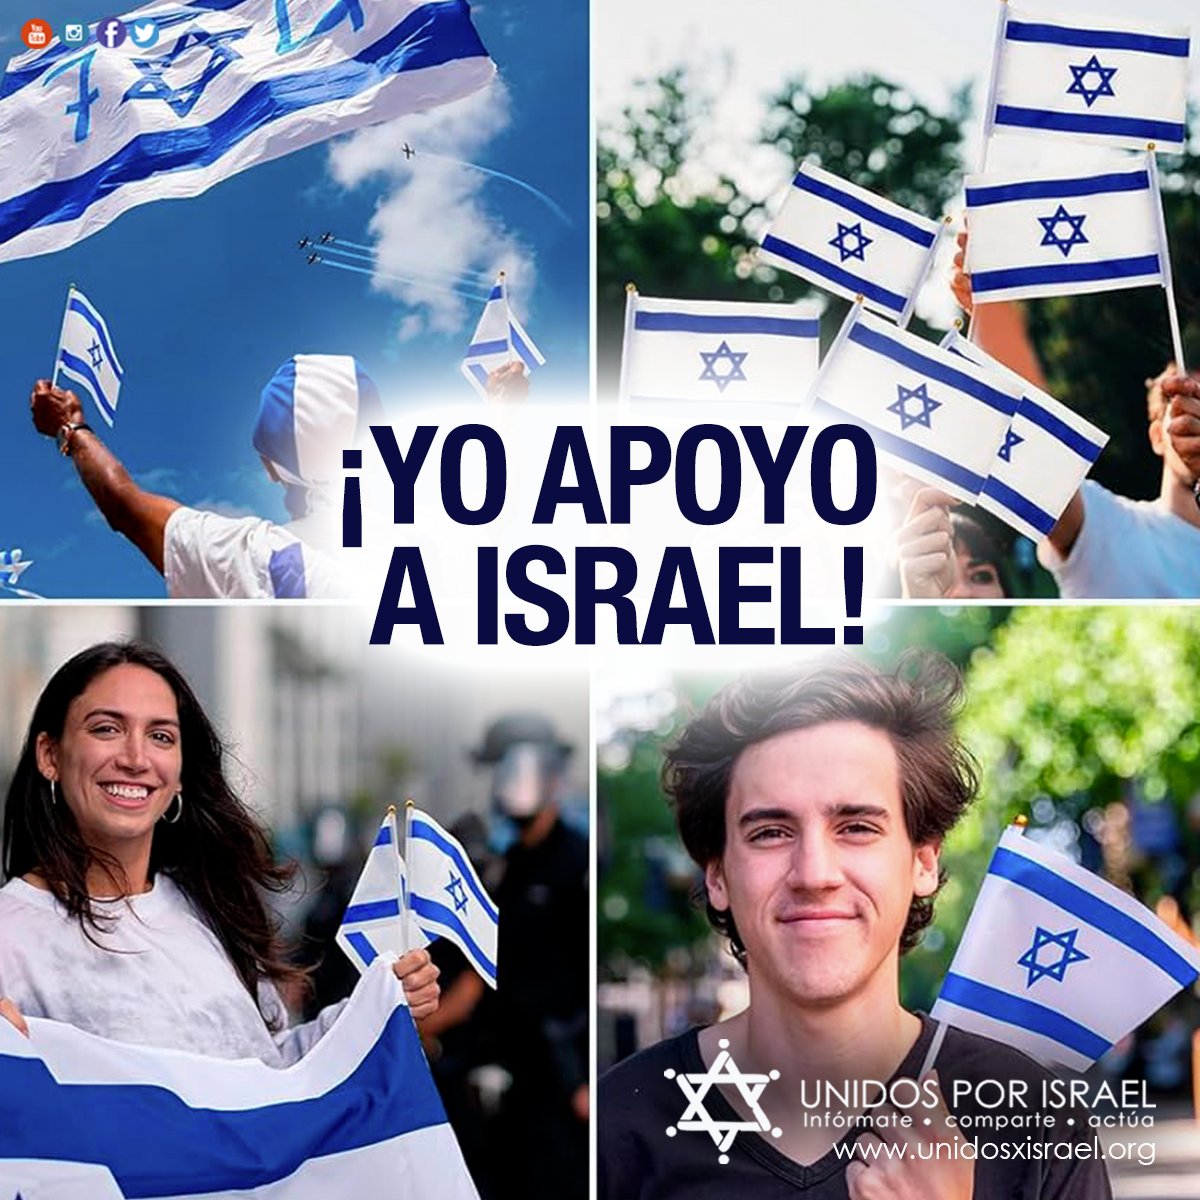 Seguimos #unidosxisrael